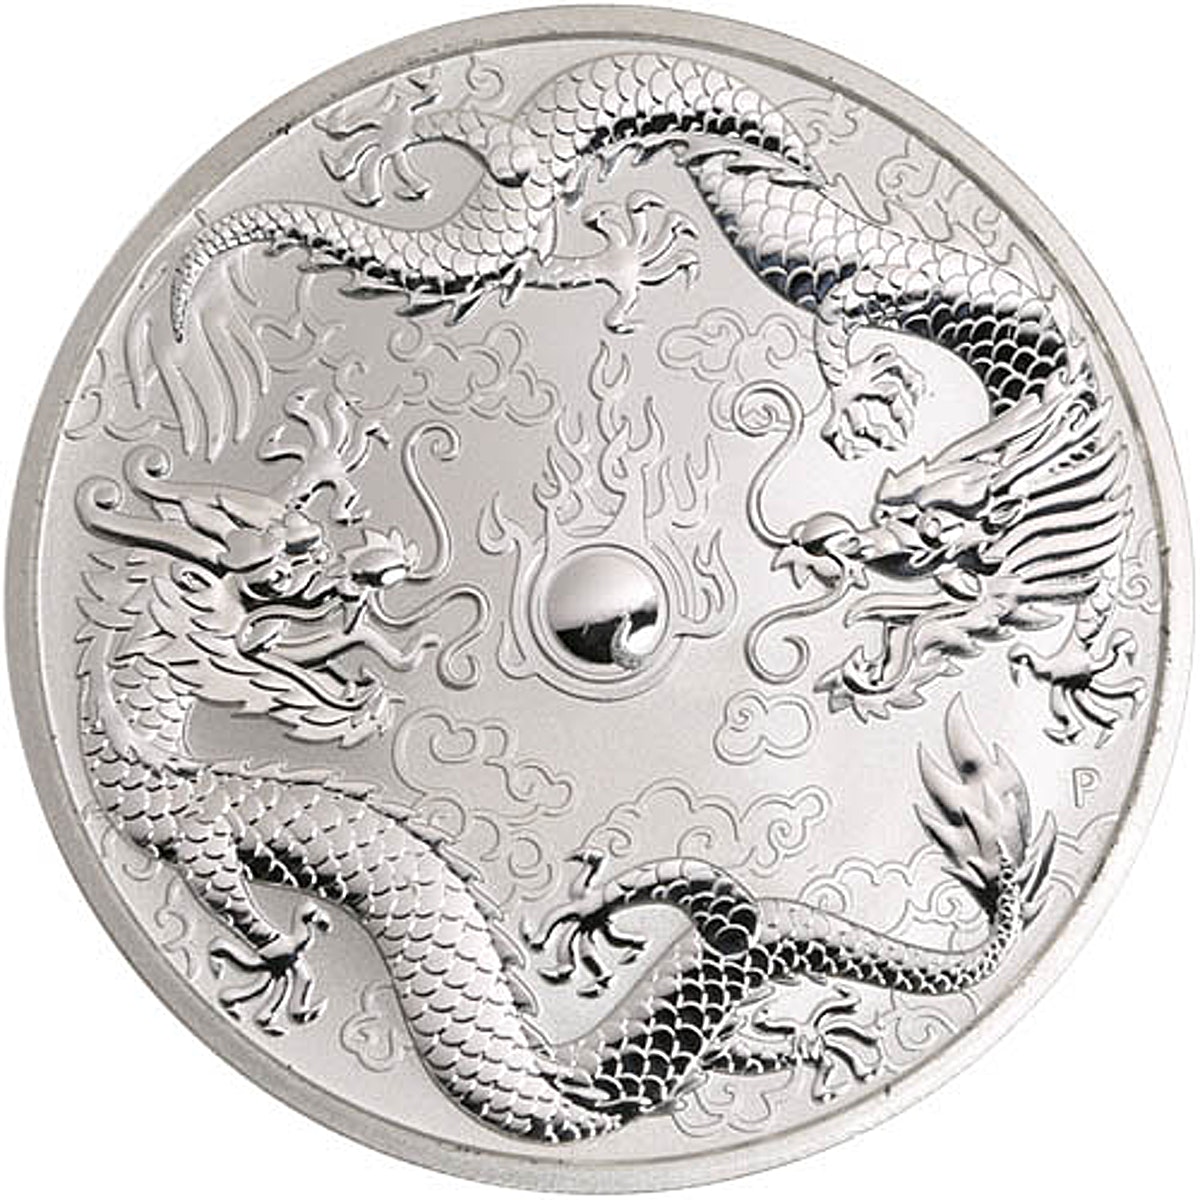 Australian Silver Double Dragon 2019 - Circulated in Good Condition - 1 oz